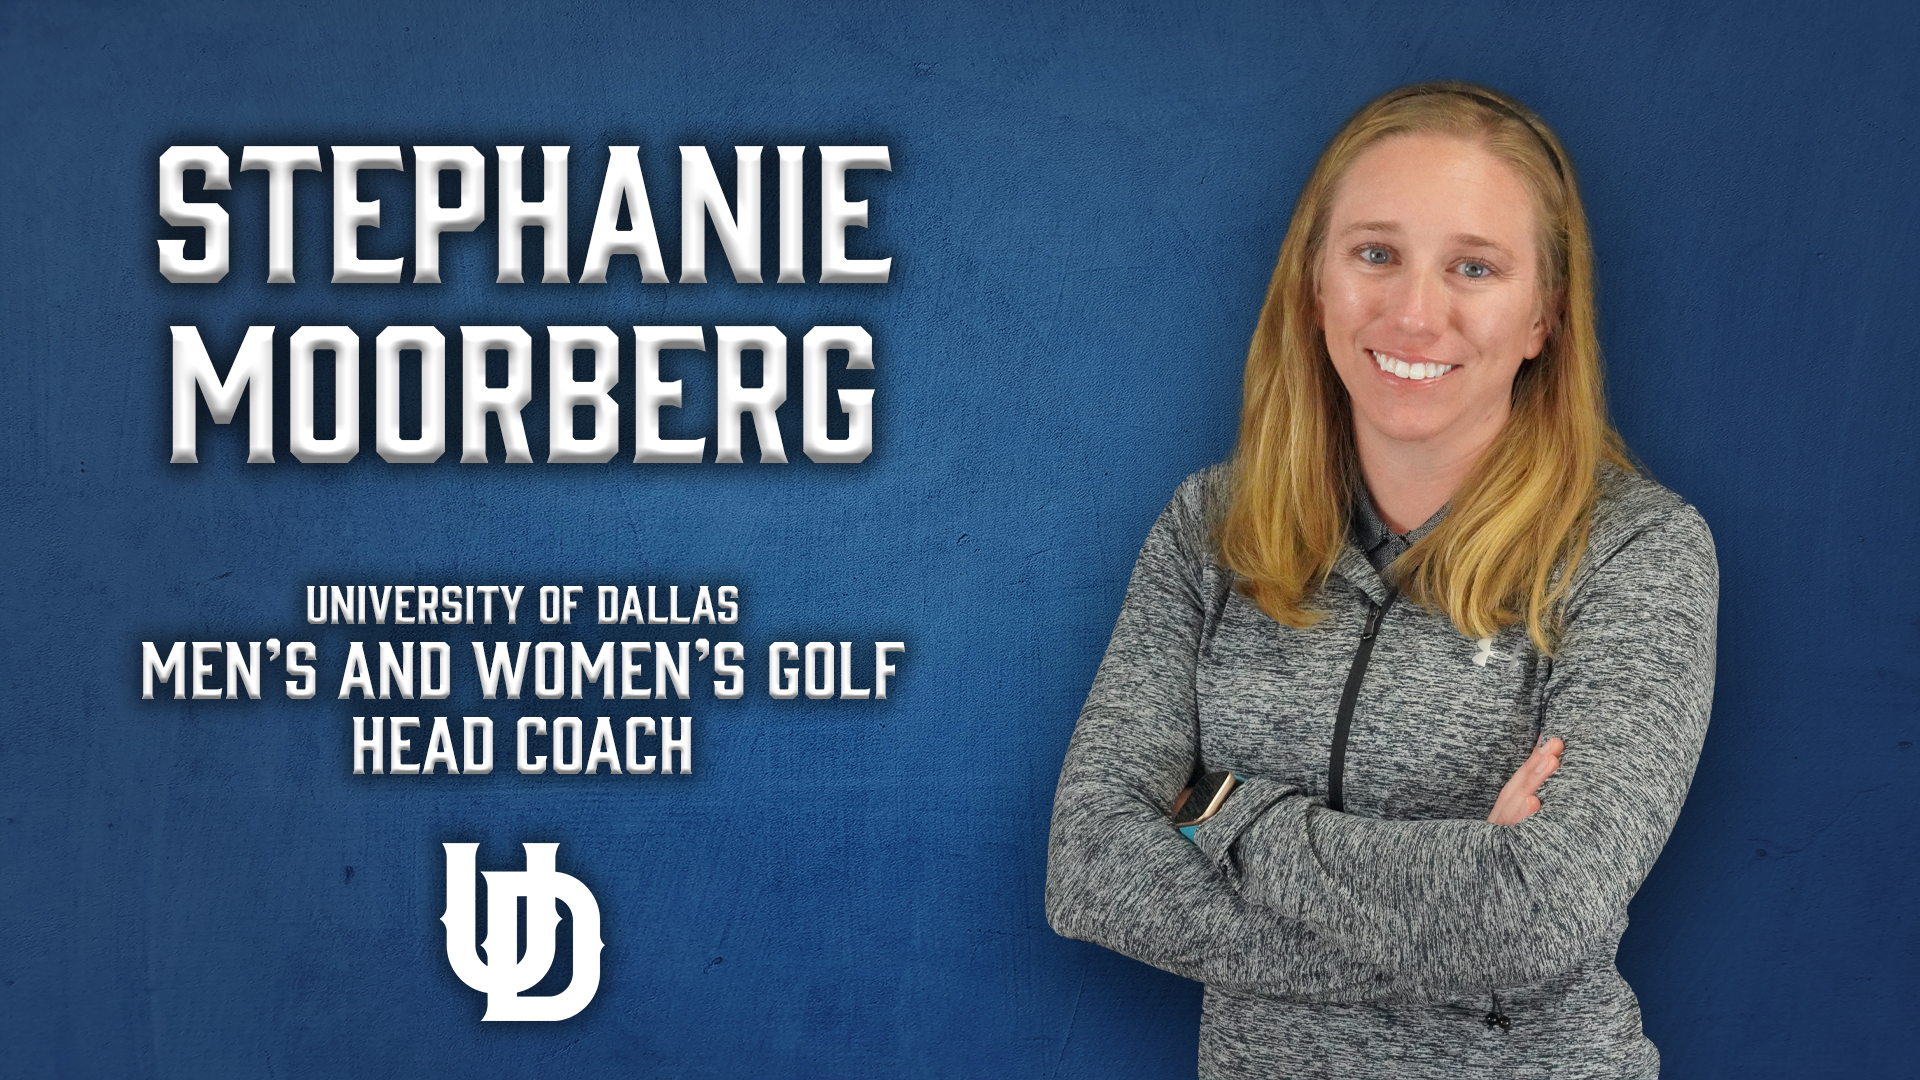 Stephanie Moorberg Named Head Coach of Men's and Women's Golf